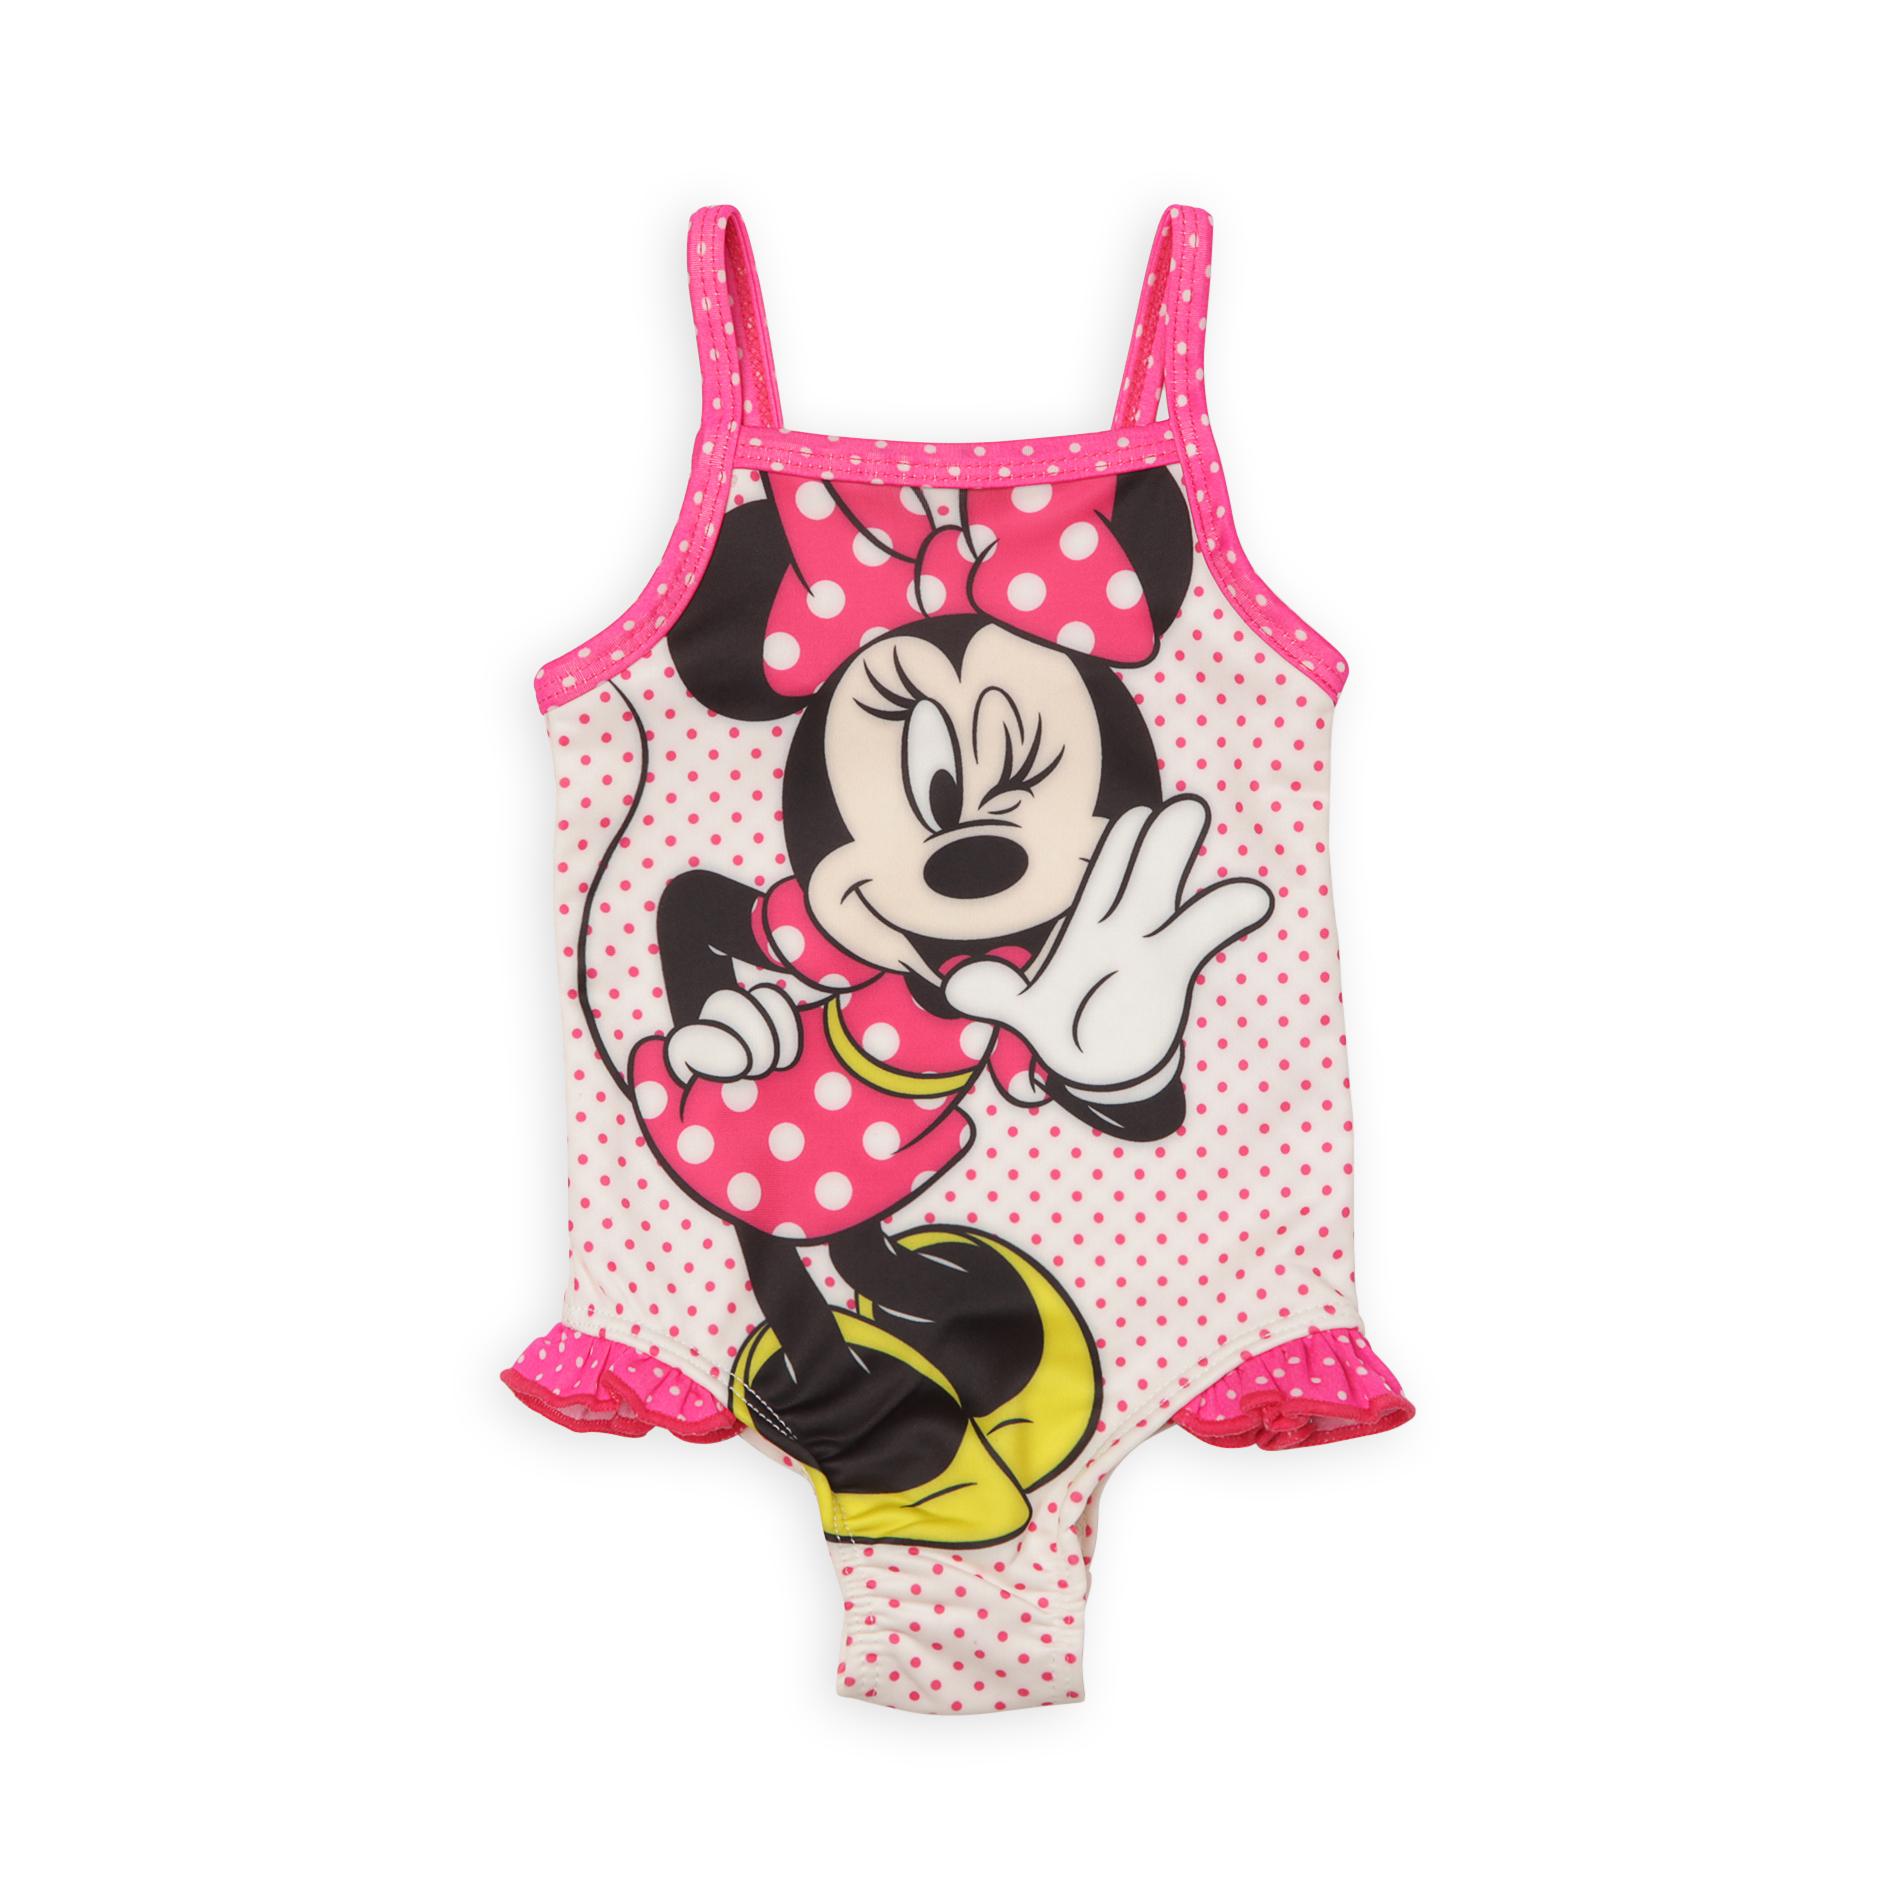 Disney Minnie Mouse Newborn Girl's Swimsuit - Polka Dot